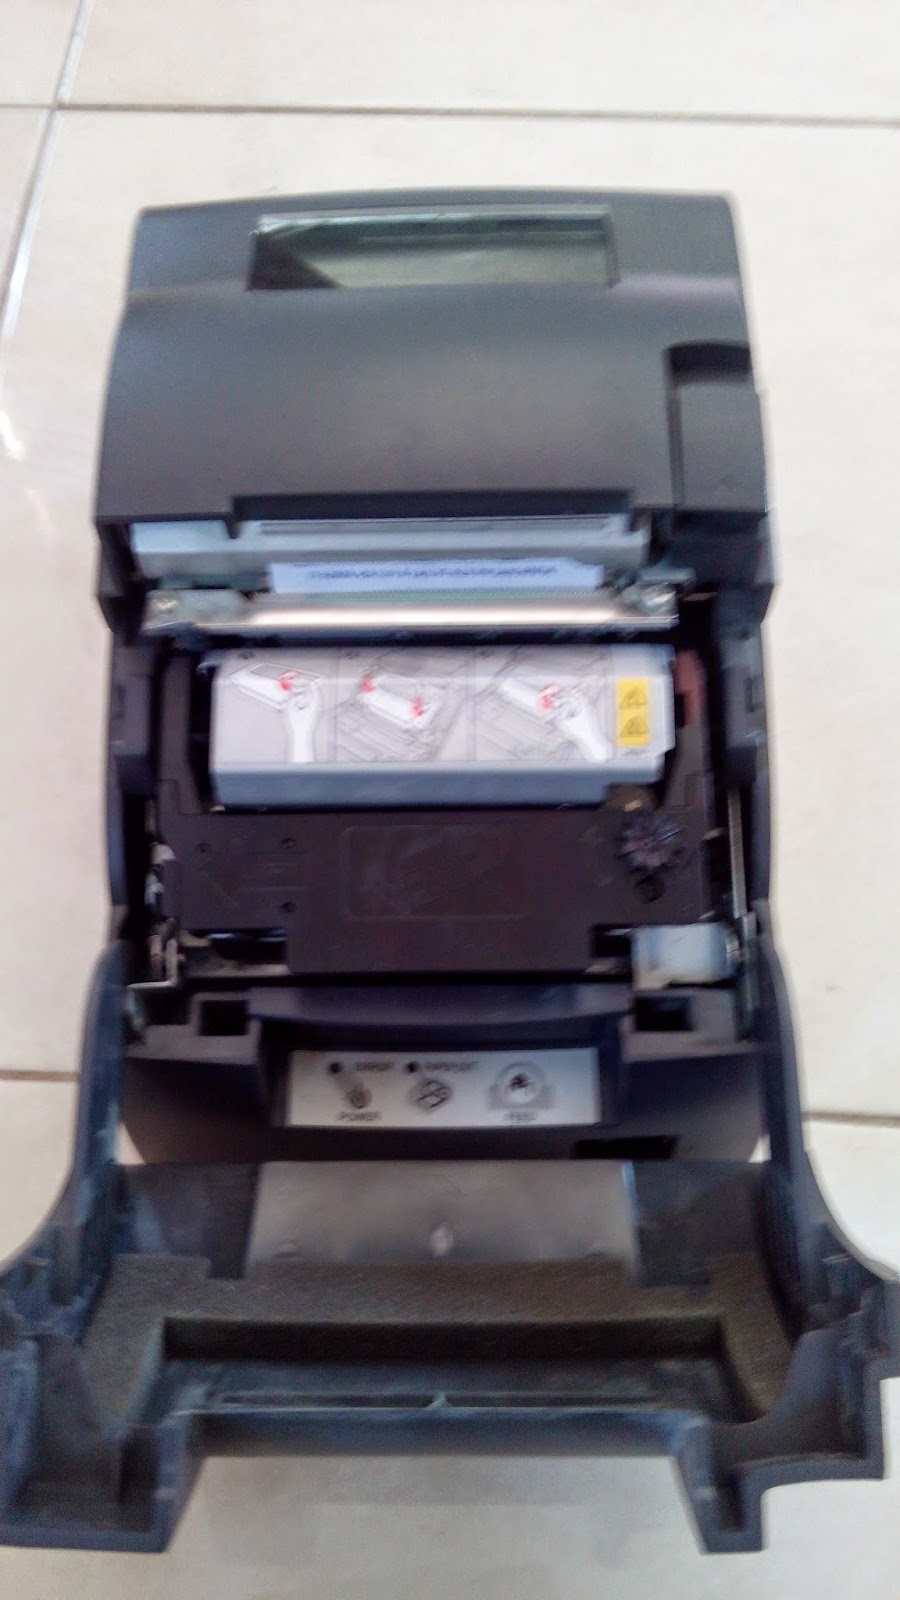 Penyebab Roda RDA printer kasir Patah